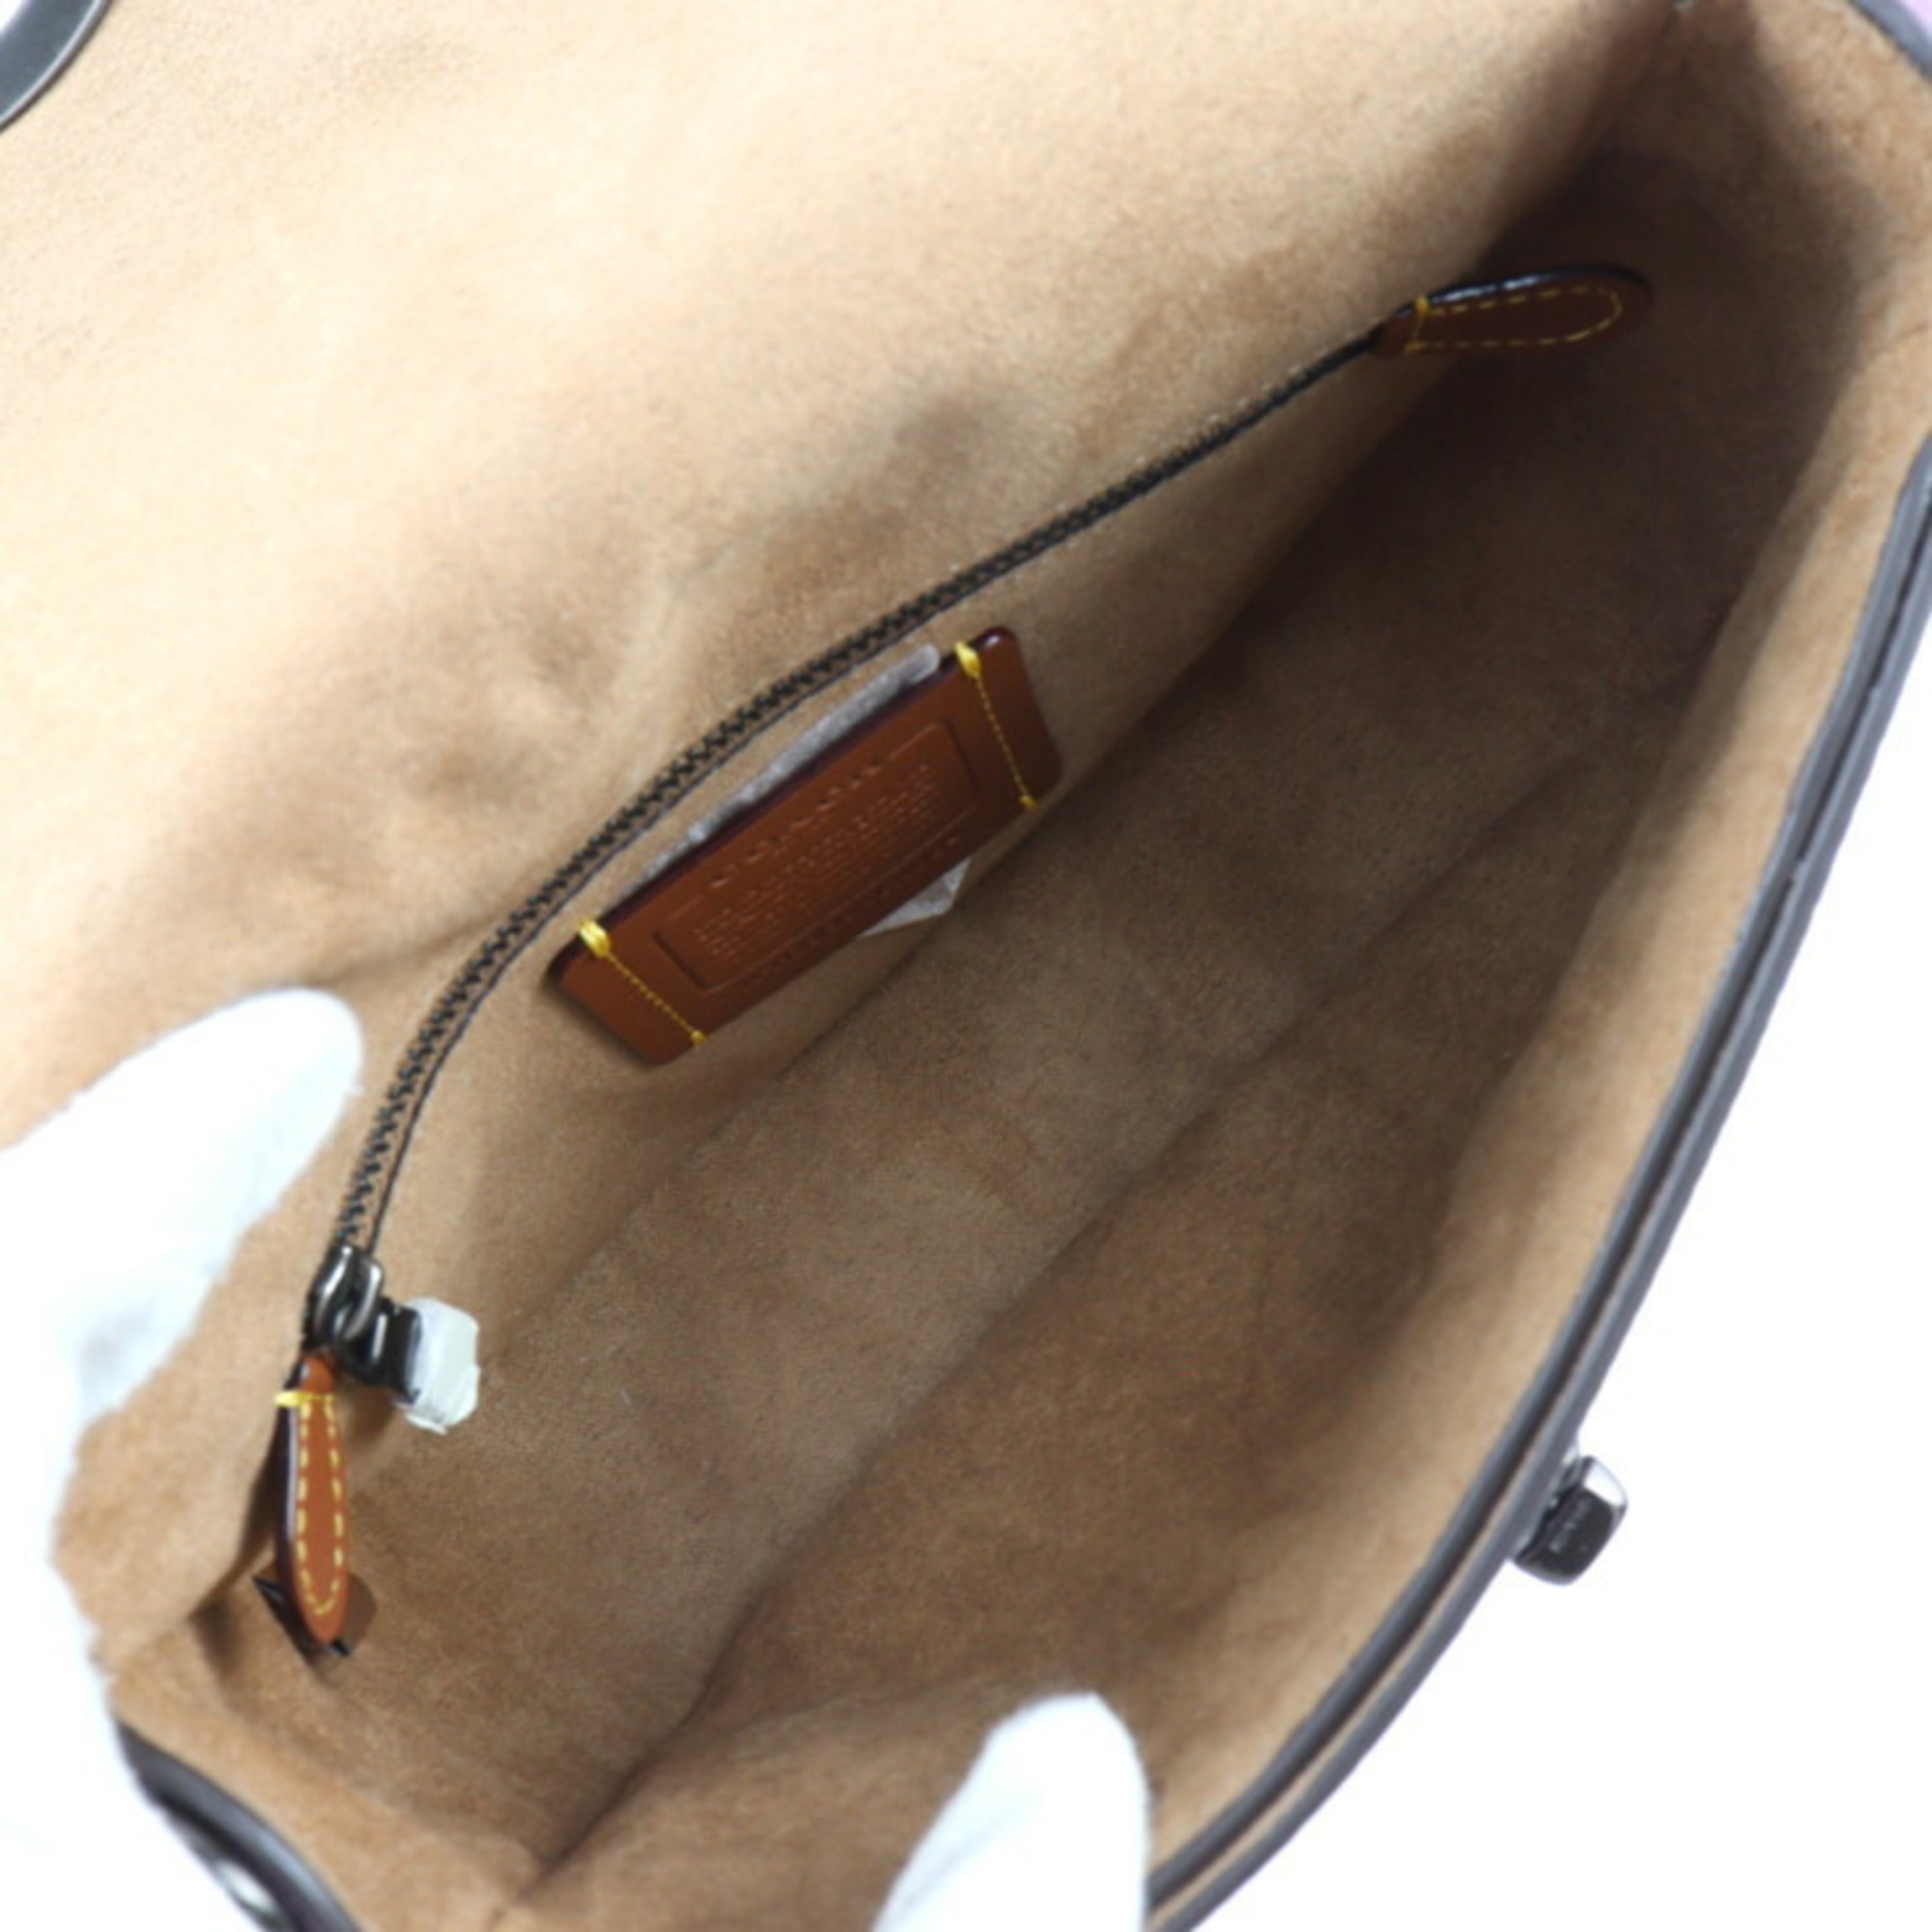 COACH Willow Saddle Shoulder Bag CA094 Leather Violet Turnlock Crossbody